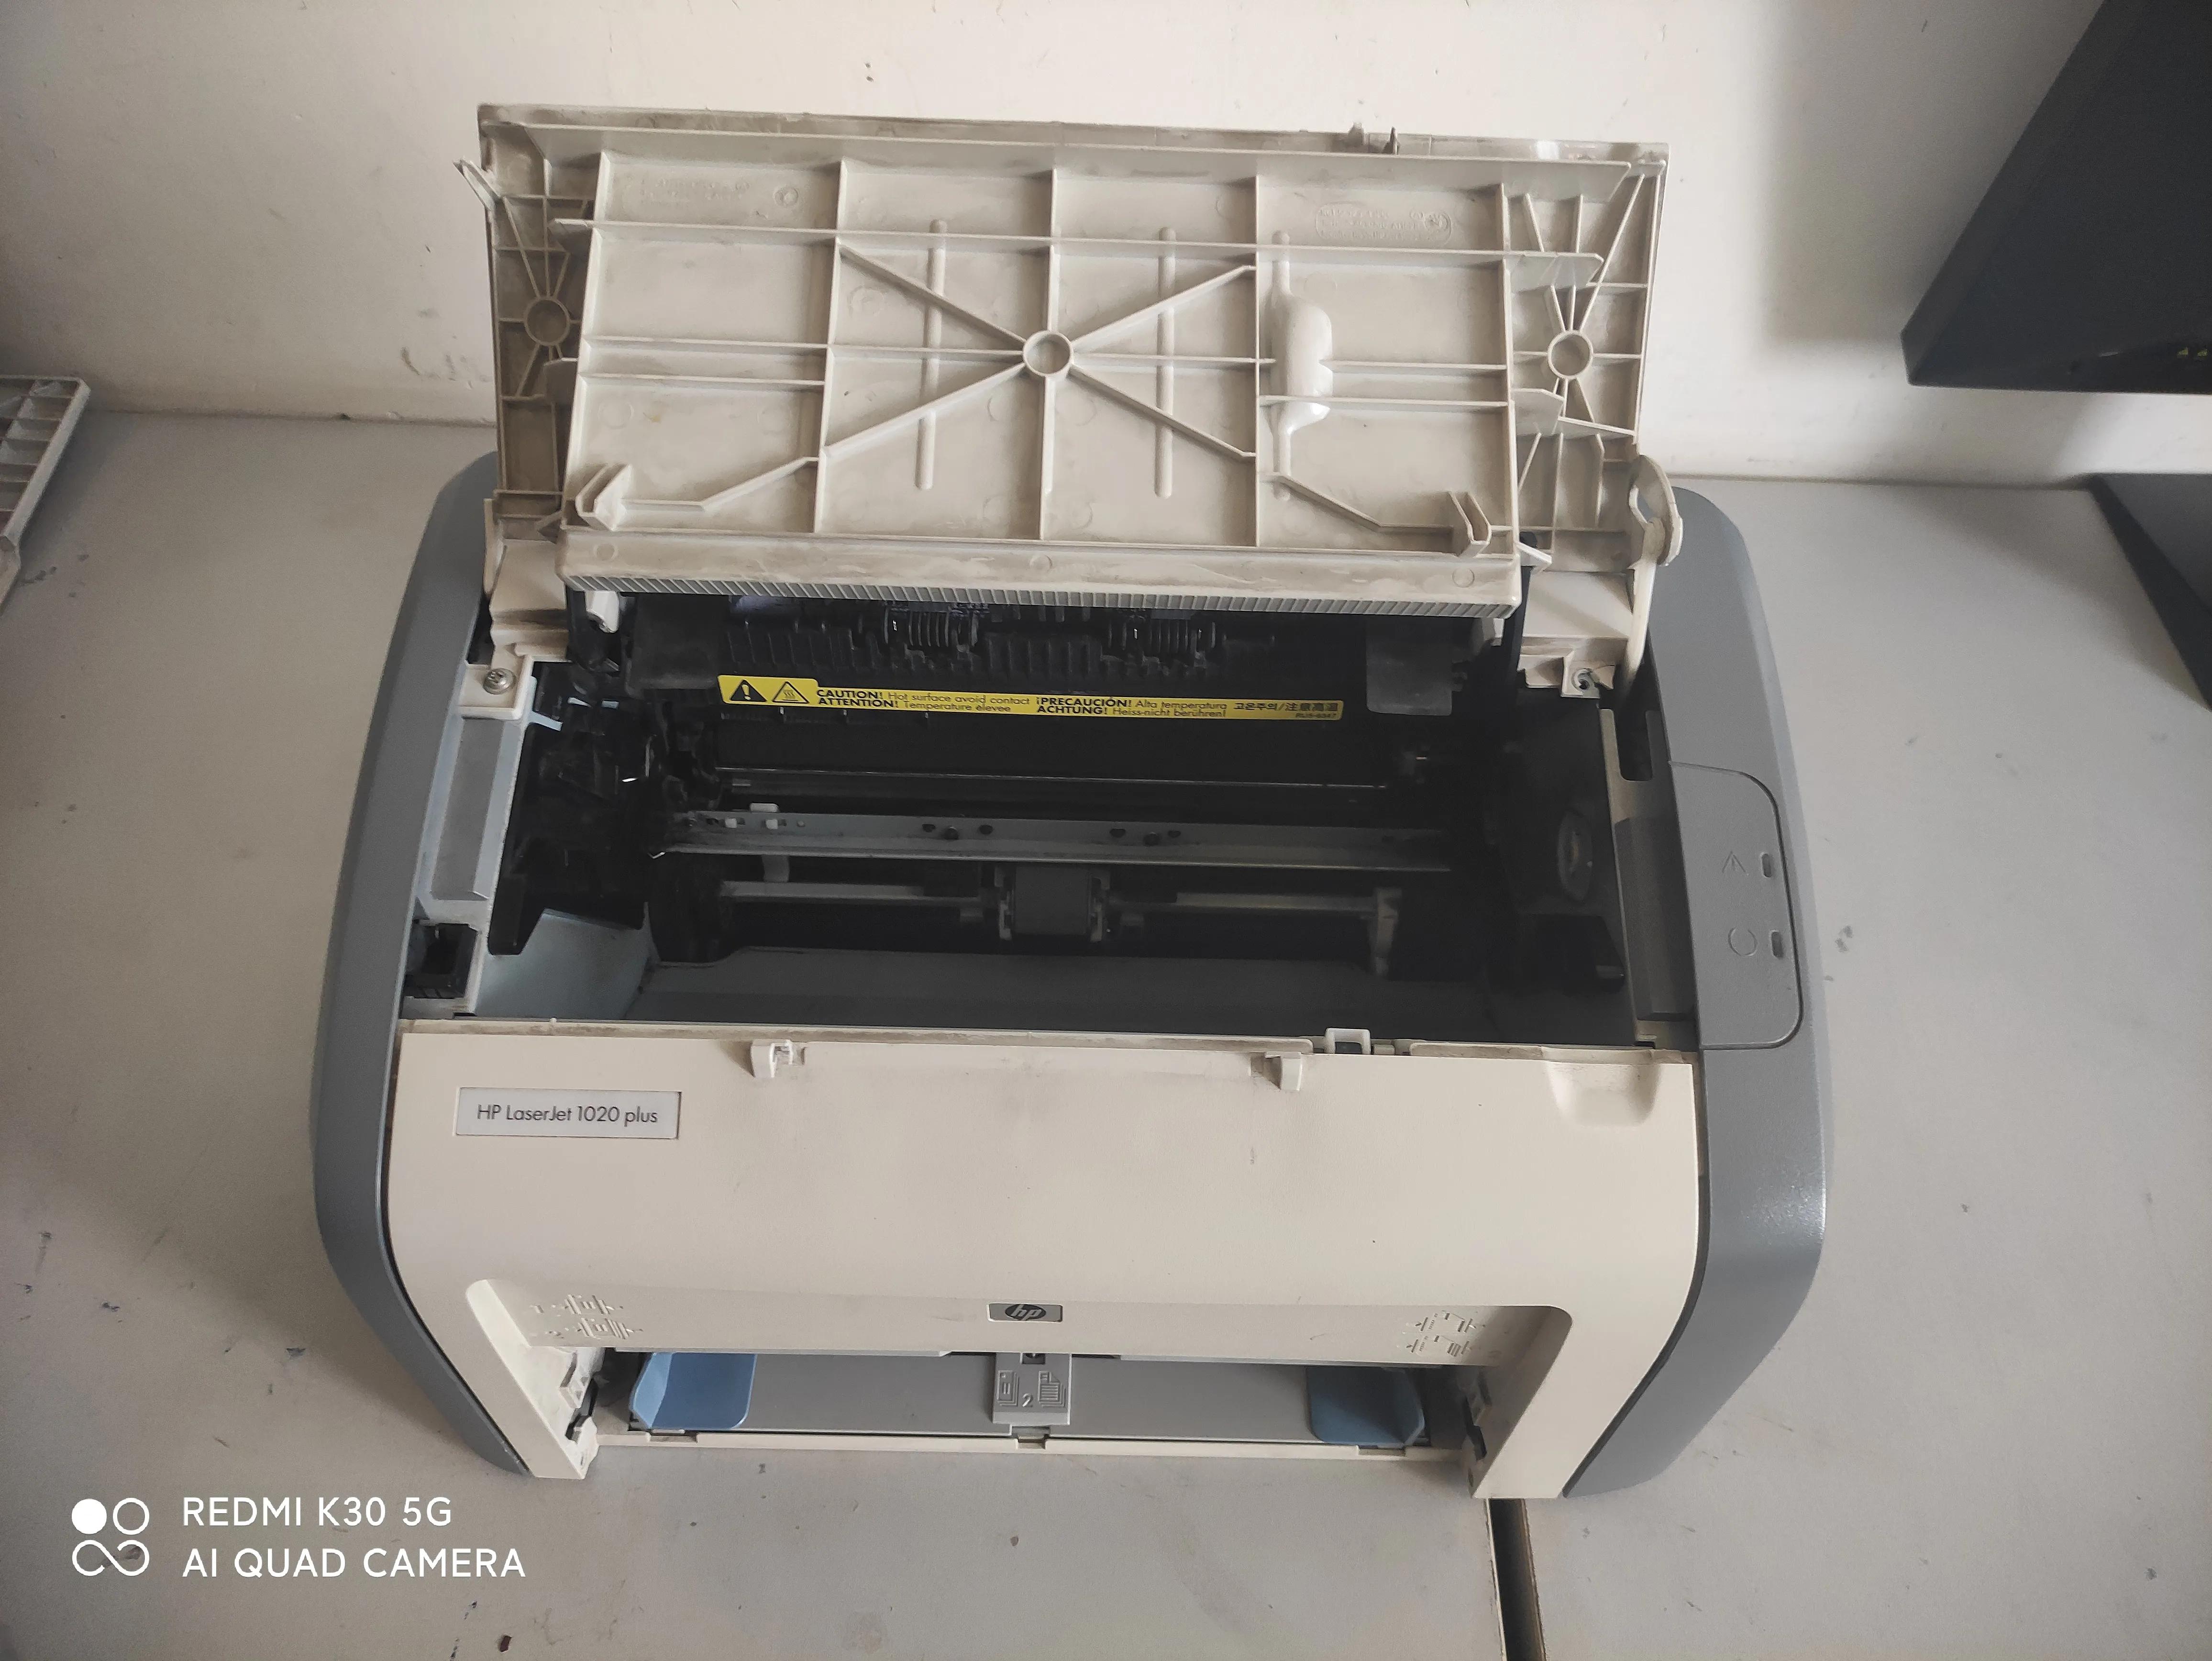 HP 1020 plus打印机维修，拆机图。新手必看